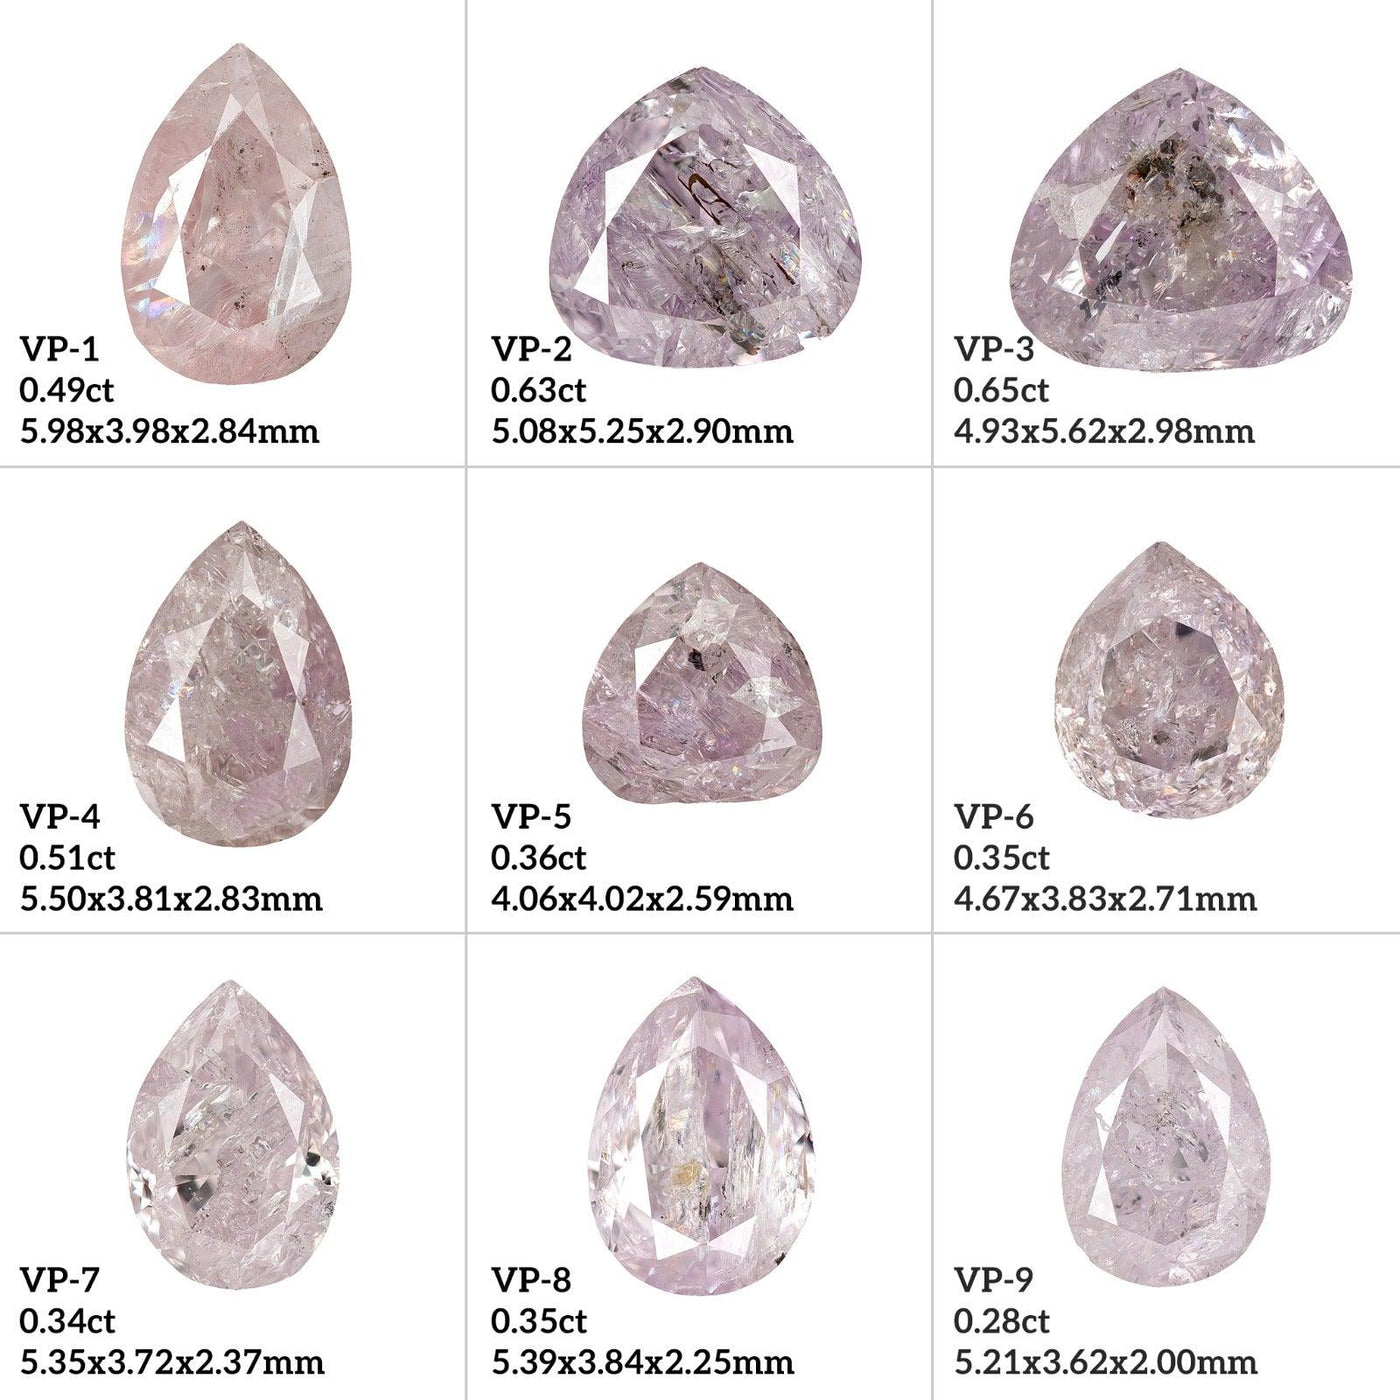 VP1 - Vivid pink pear diamond